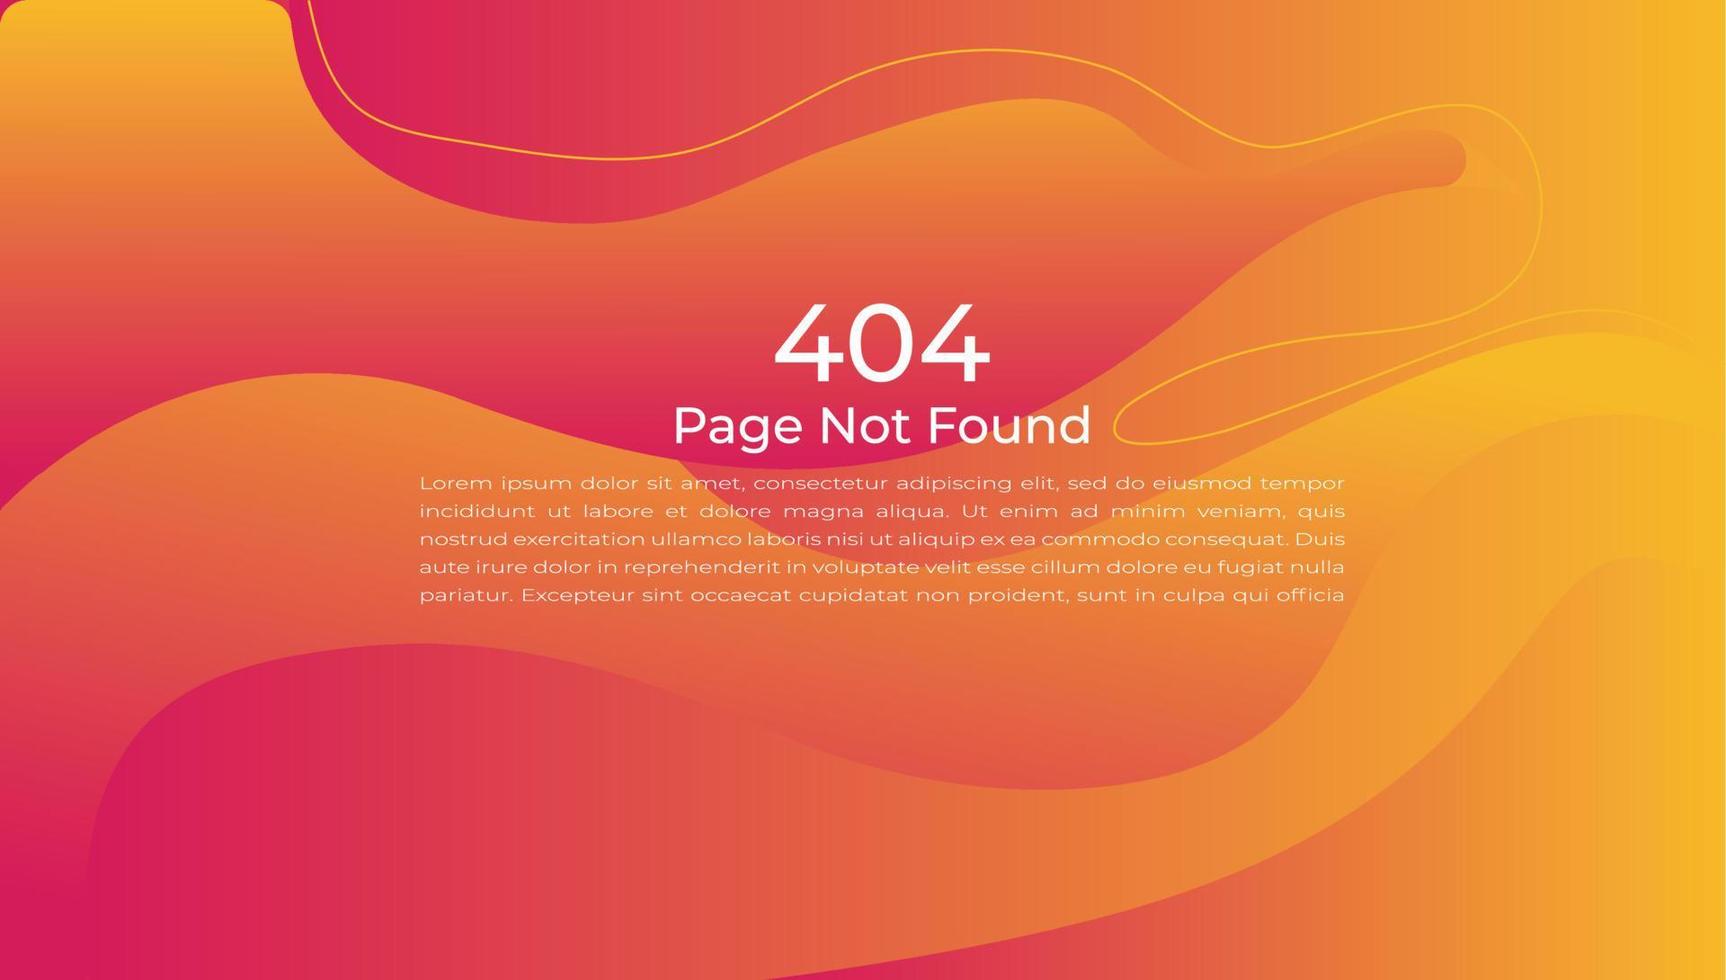 error 404 page not found background. vector